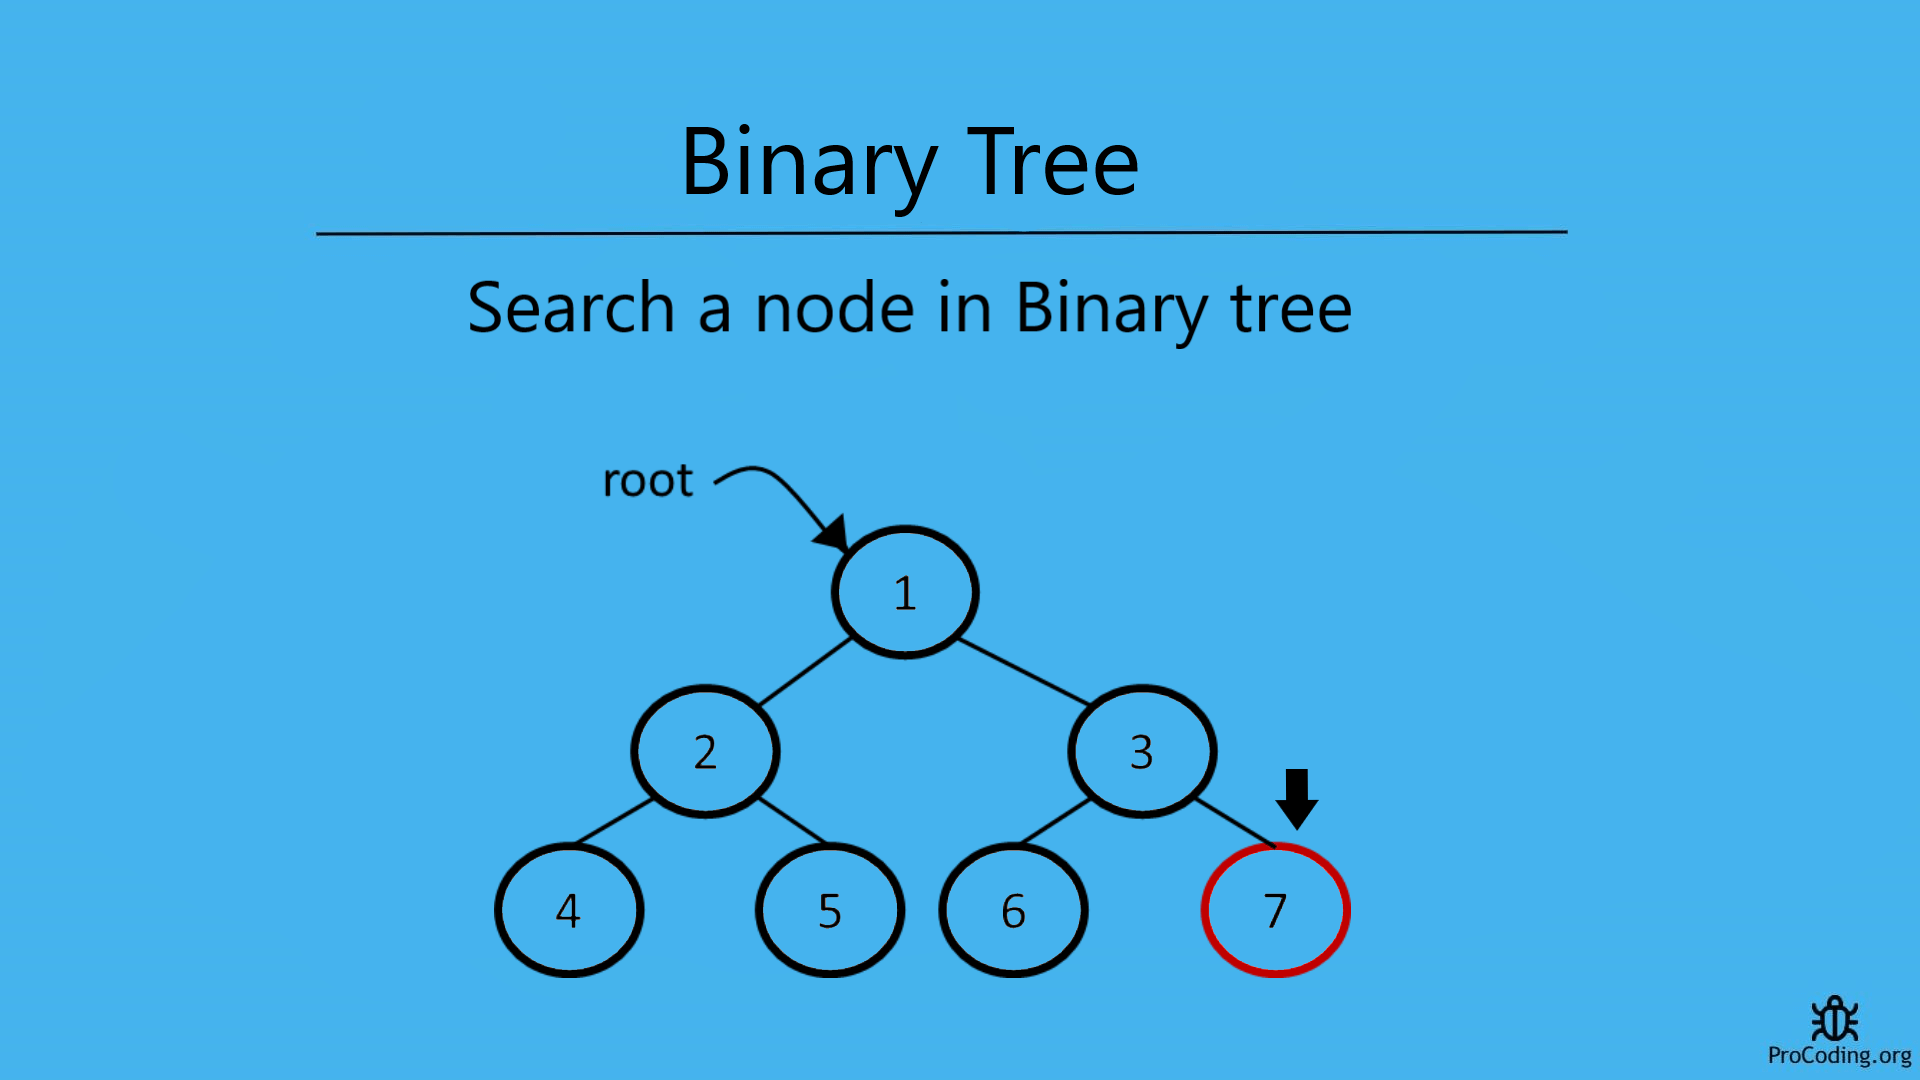 Search a node in binary tree